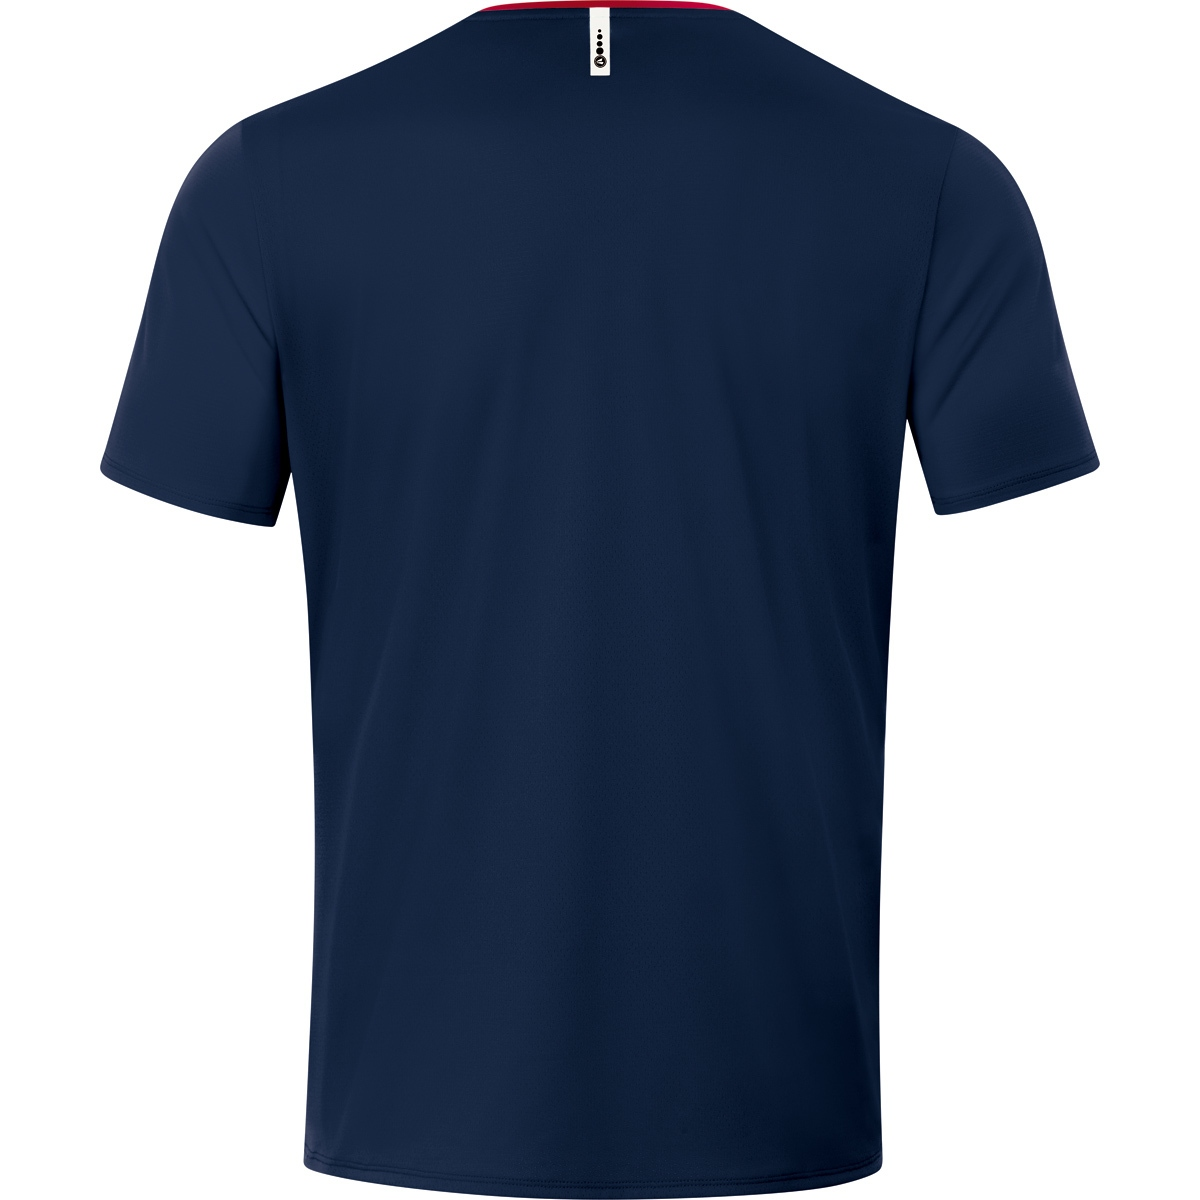 T-Shirt Gr. JAKO 6120 2.0 Herren, rot, marine/chili M, Champ